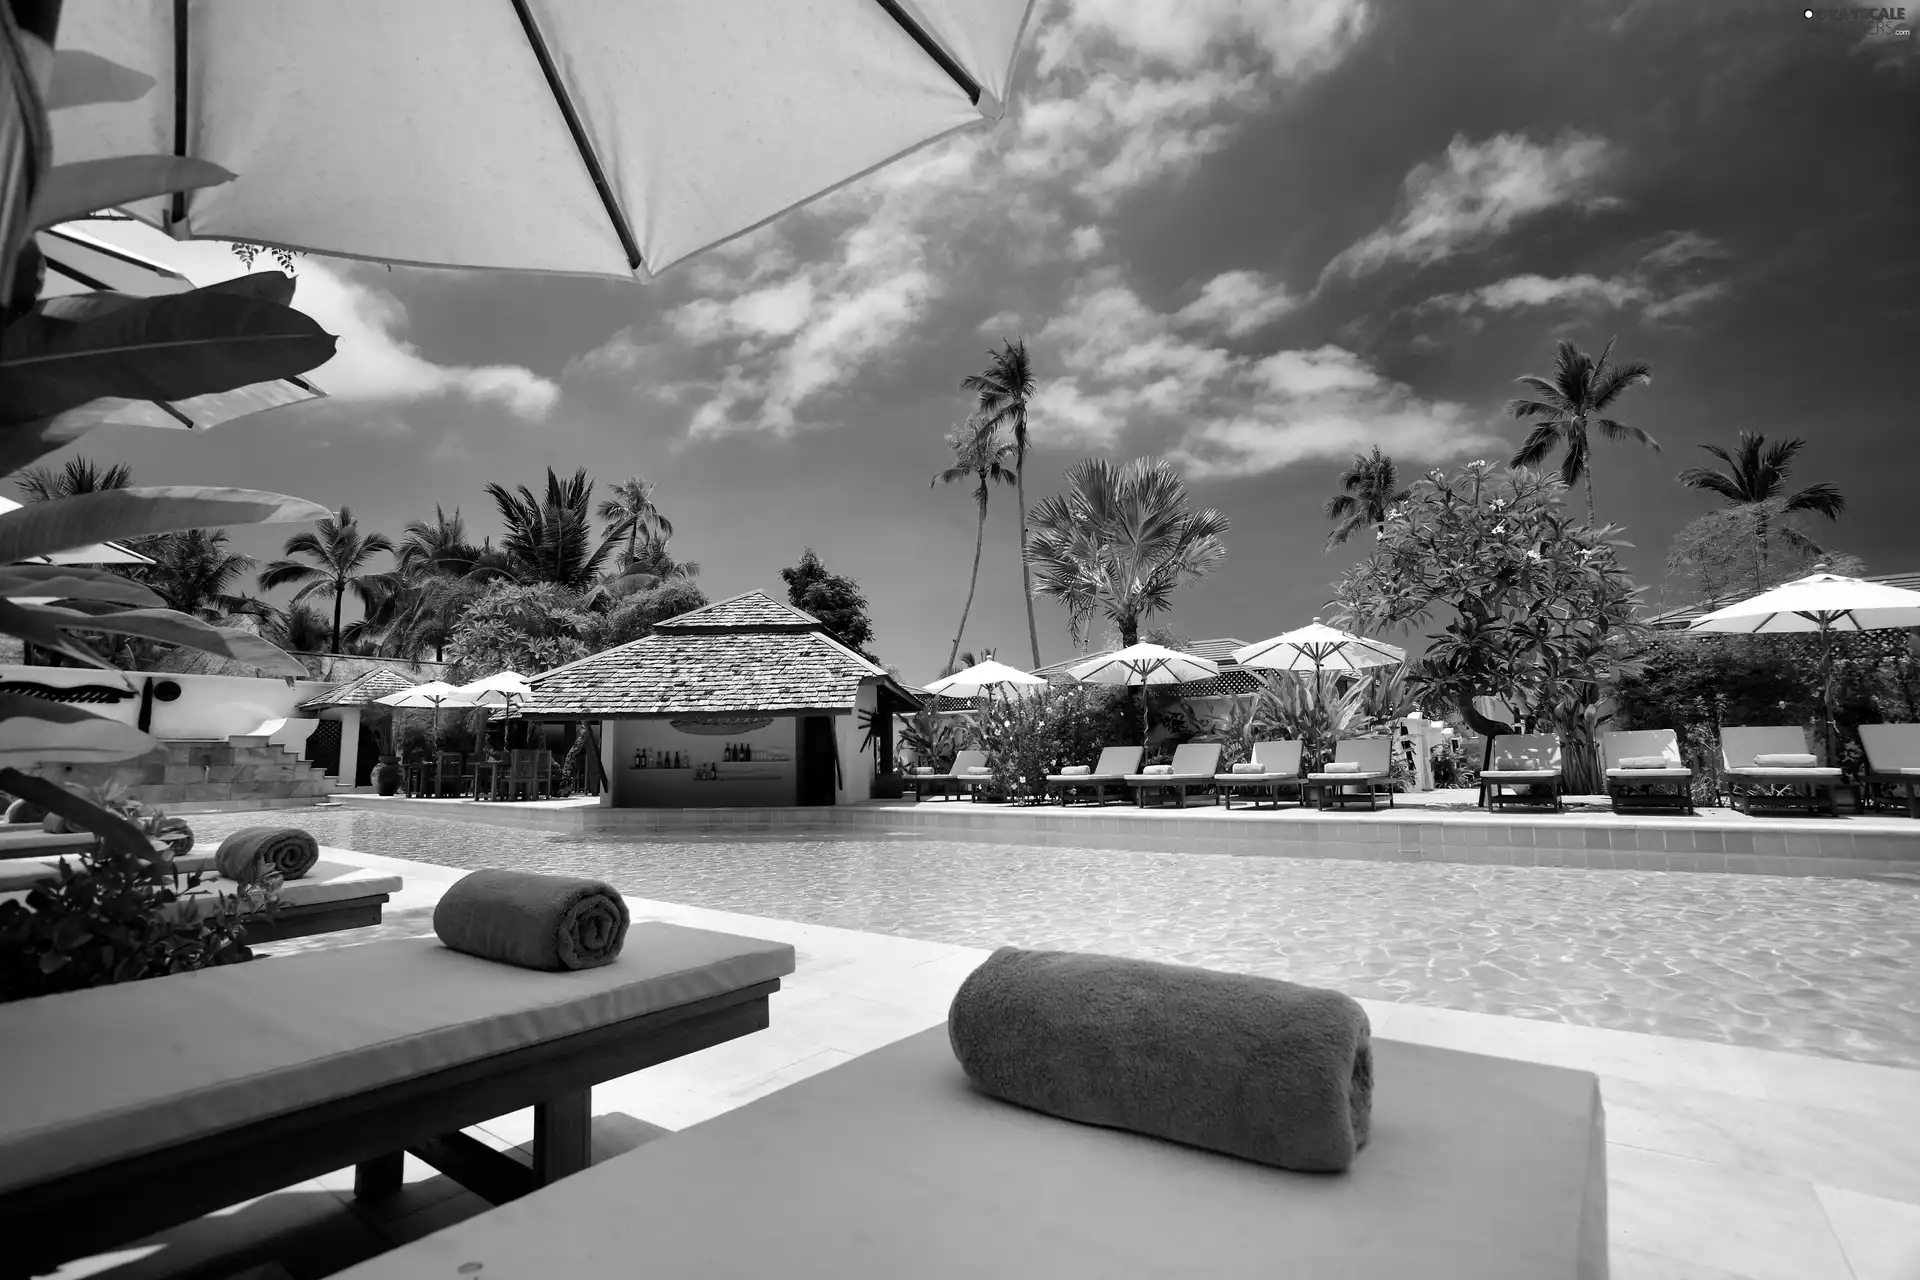 Bar, Pool, holiday, Sunshade, tropic, deck chair